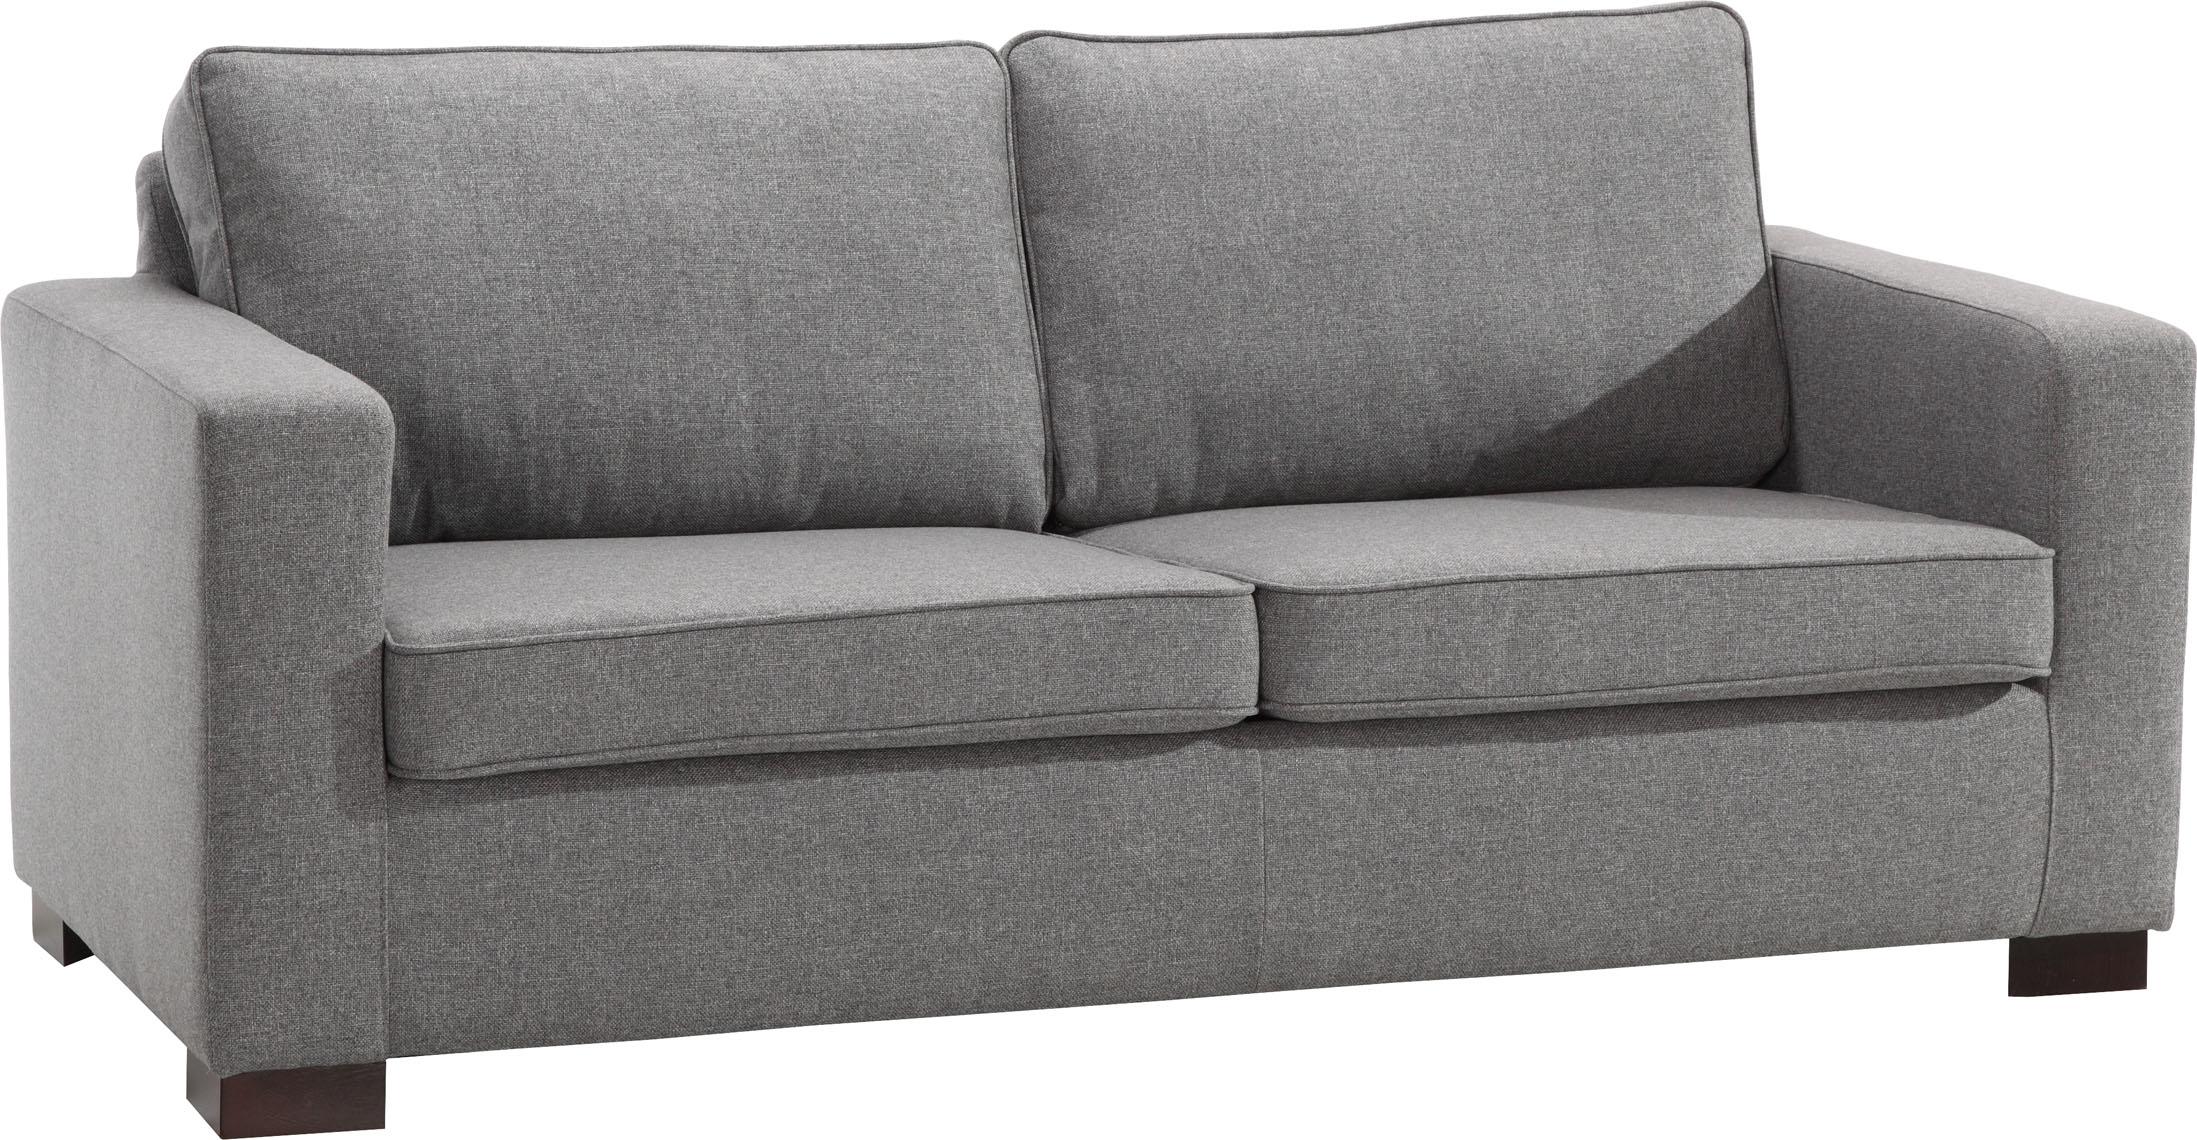 2-seat sofa bed Noel